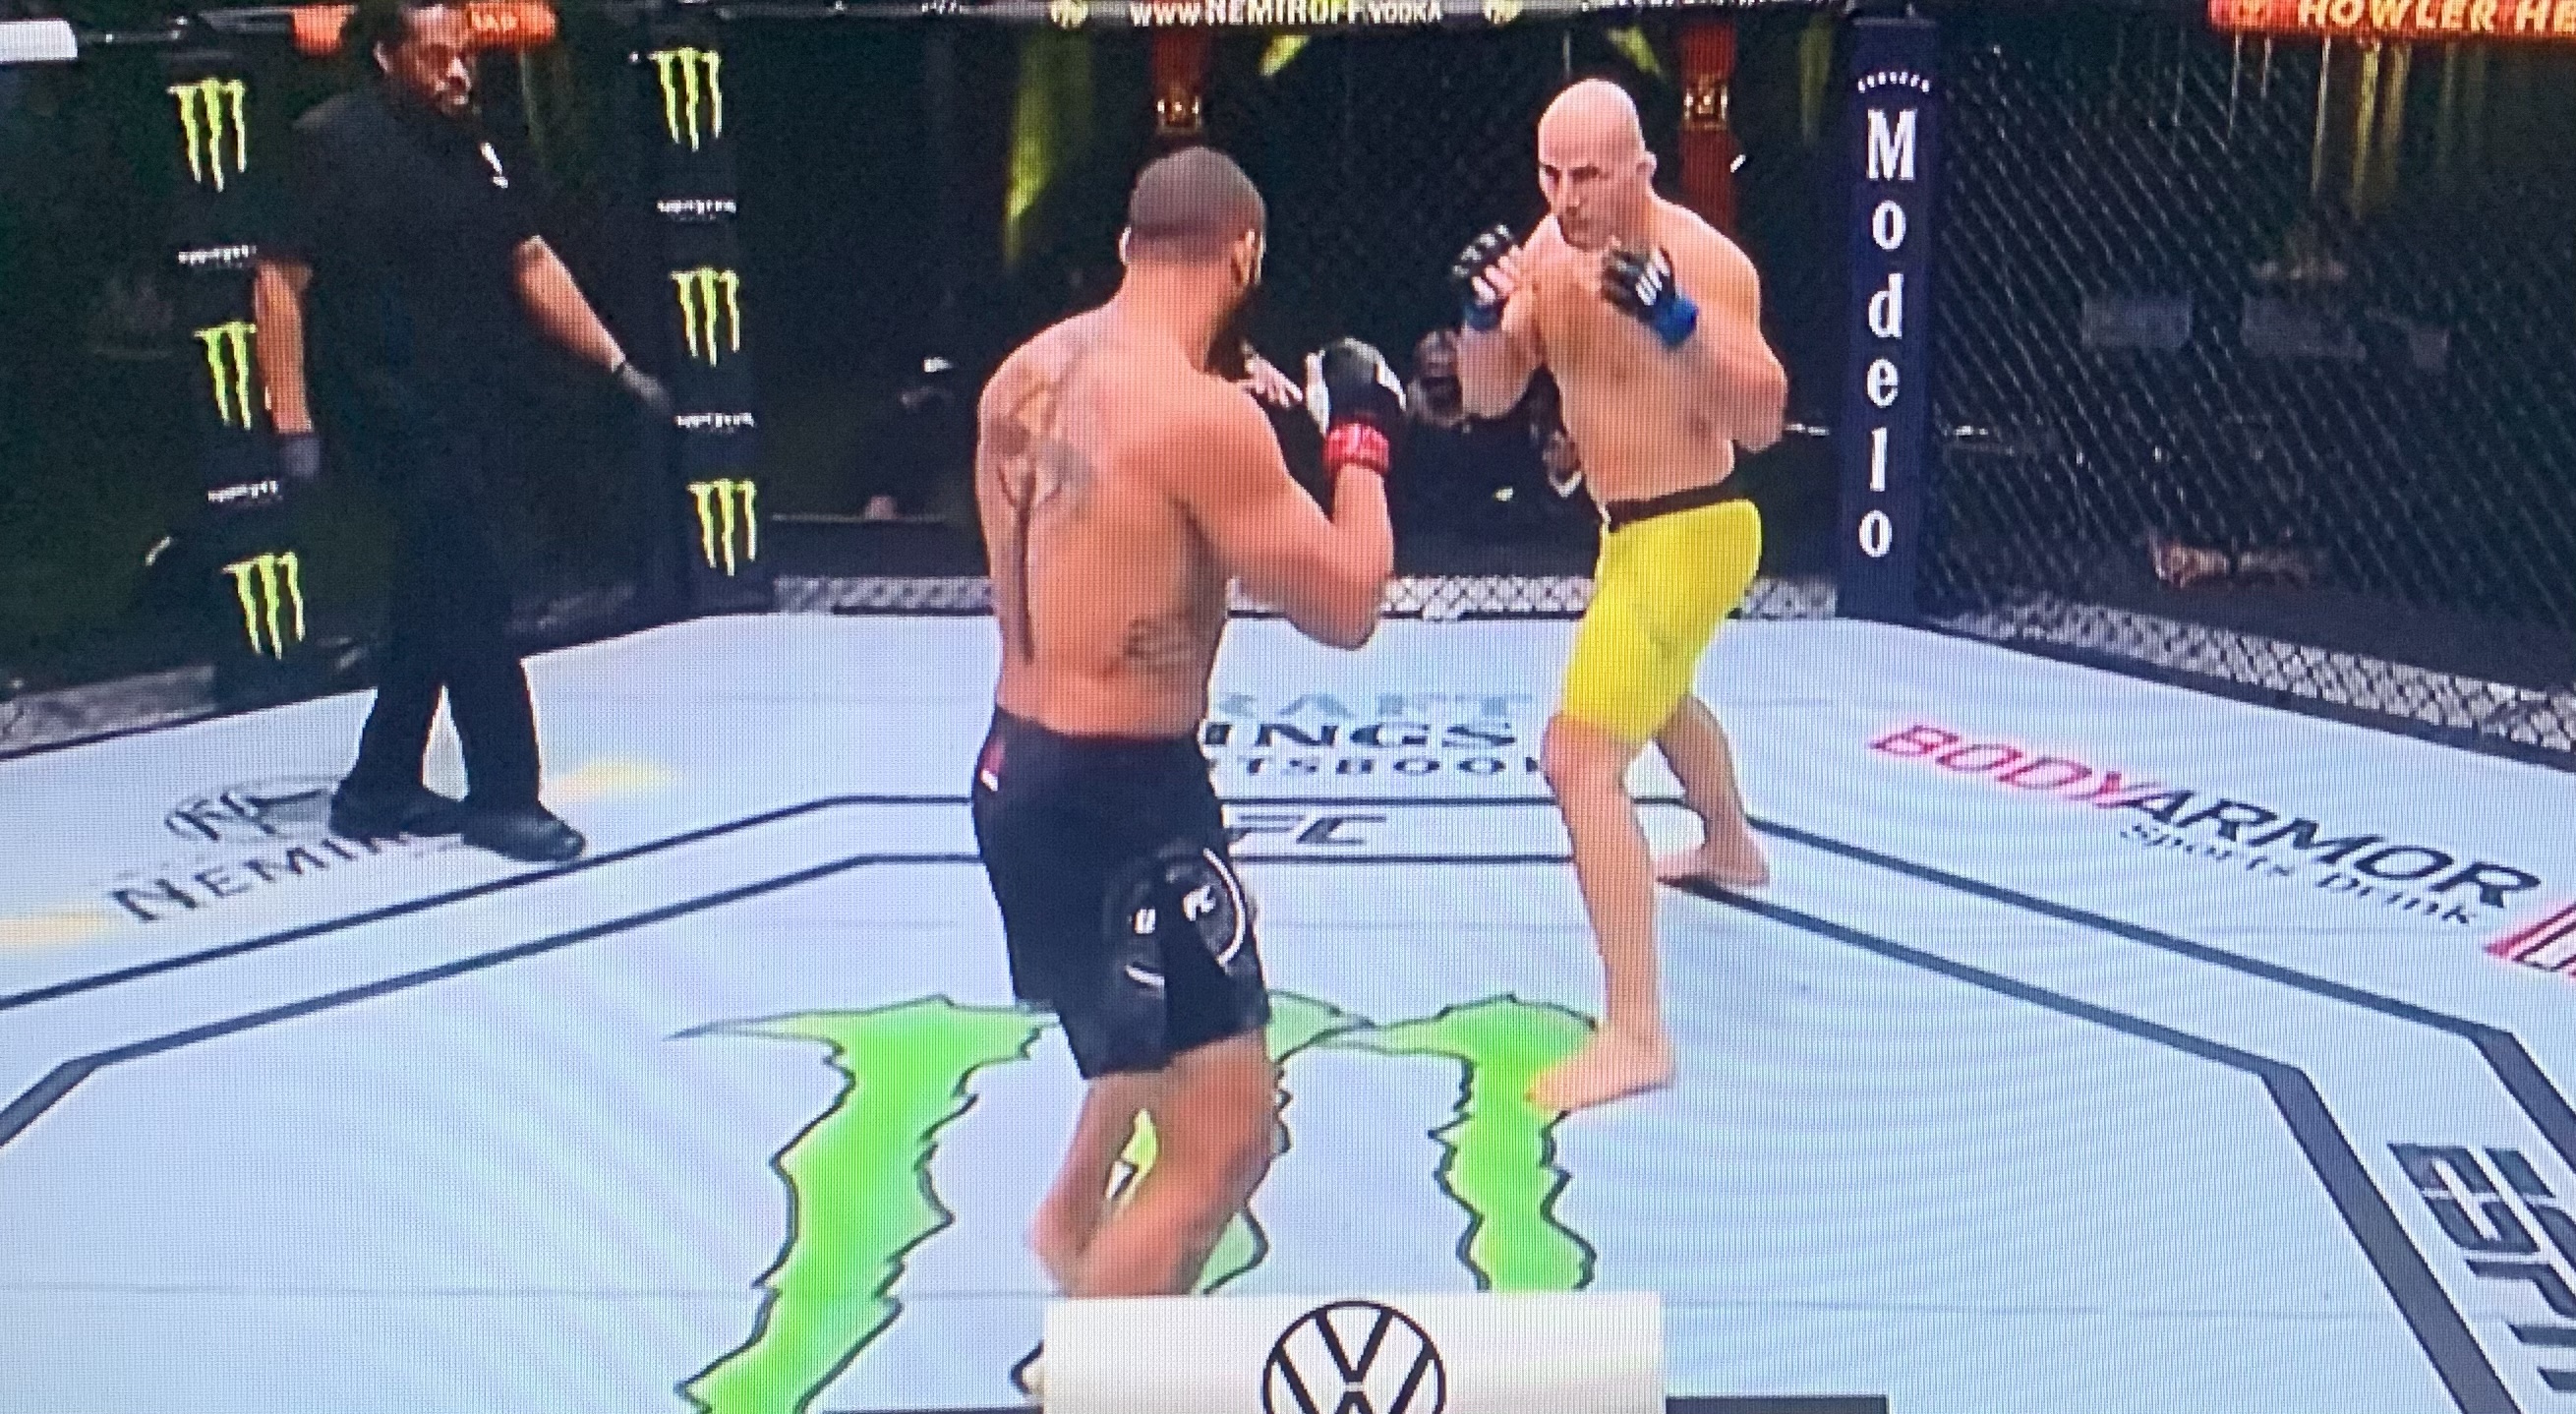 VÍDEO - Em grande luta, Glover Teixeira finaliza Thiago Marreta no UFC Las Vegas